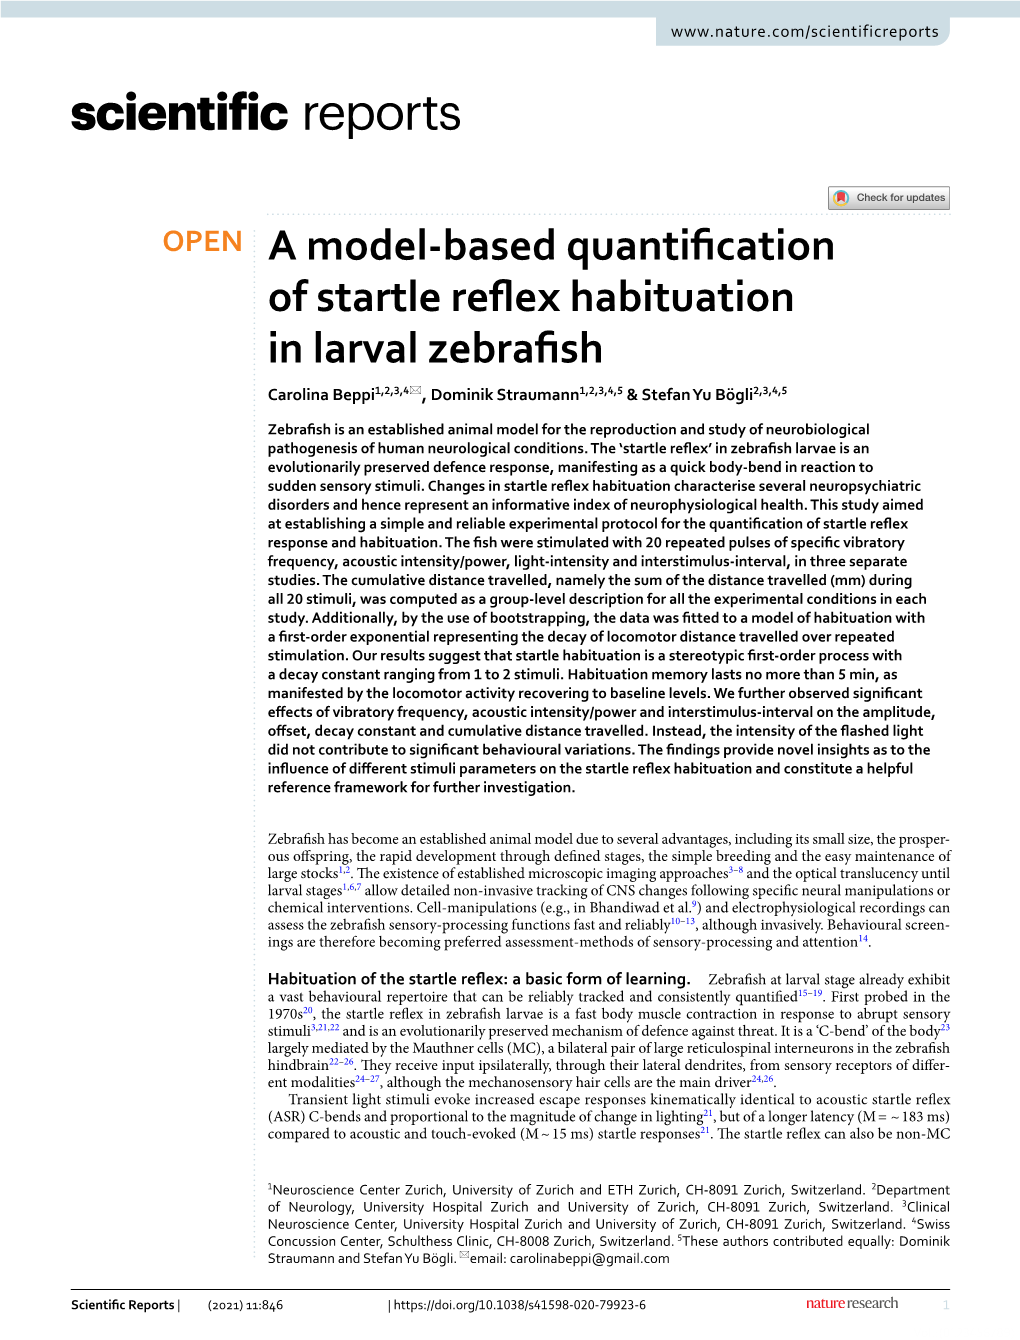 A Model-Based Quantification of Startle Reflex Habituation in Larval Zebrafish